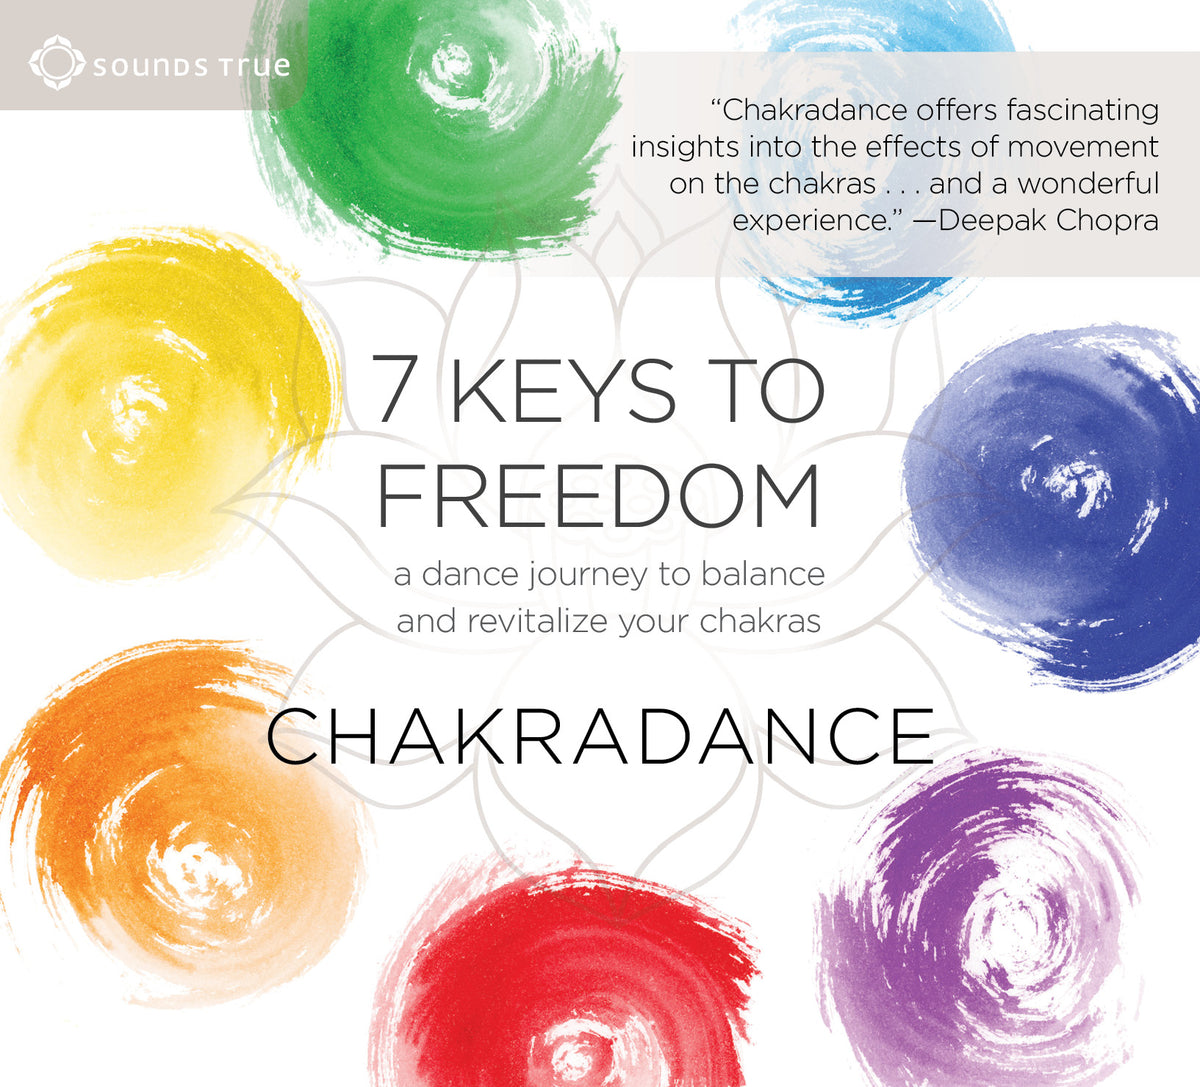 Chakradance chakra healing and balancing practice